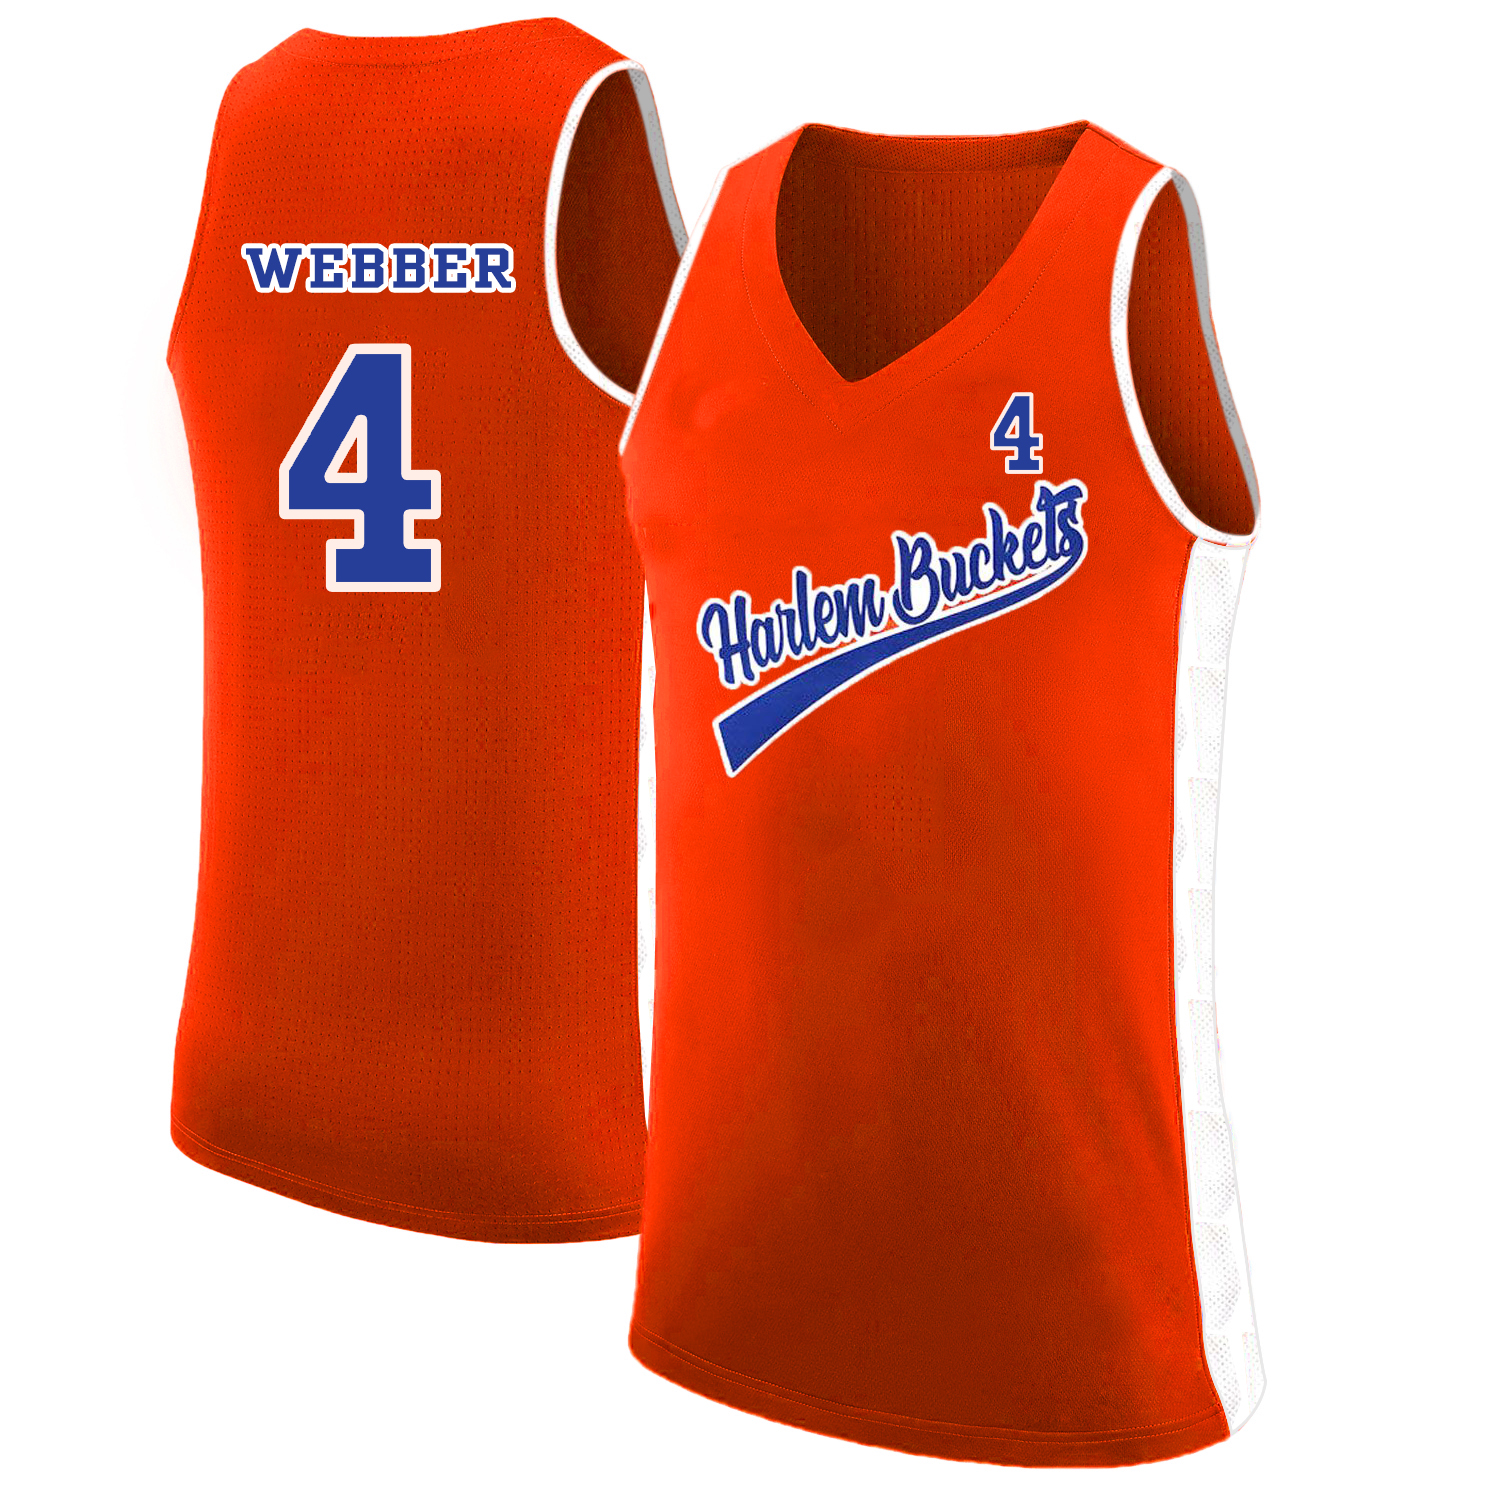 Harlem Buckets 4 Chris Webber Orange Uncle Drew Basketball Jersey